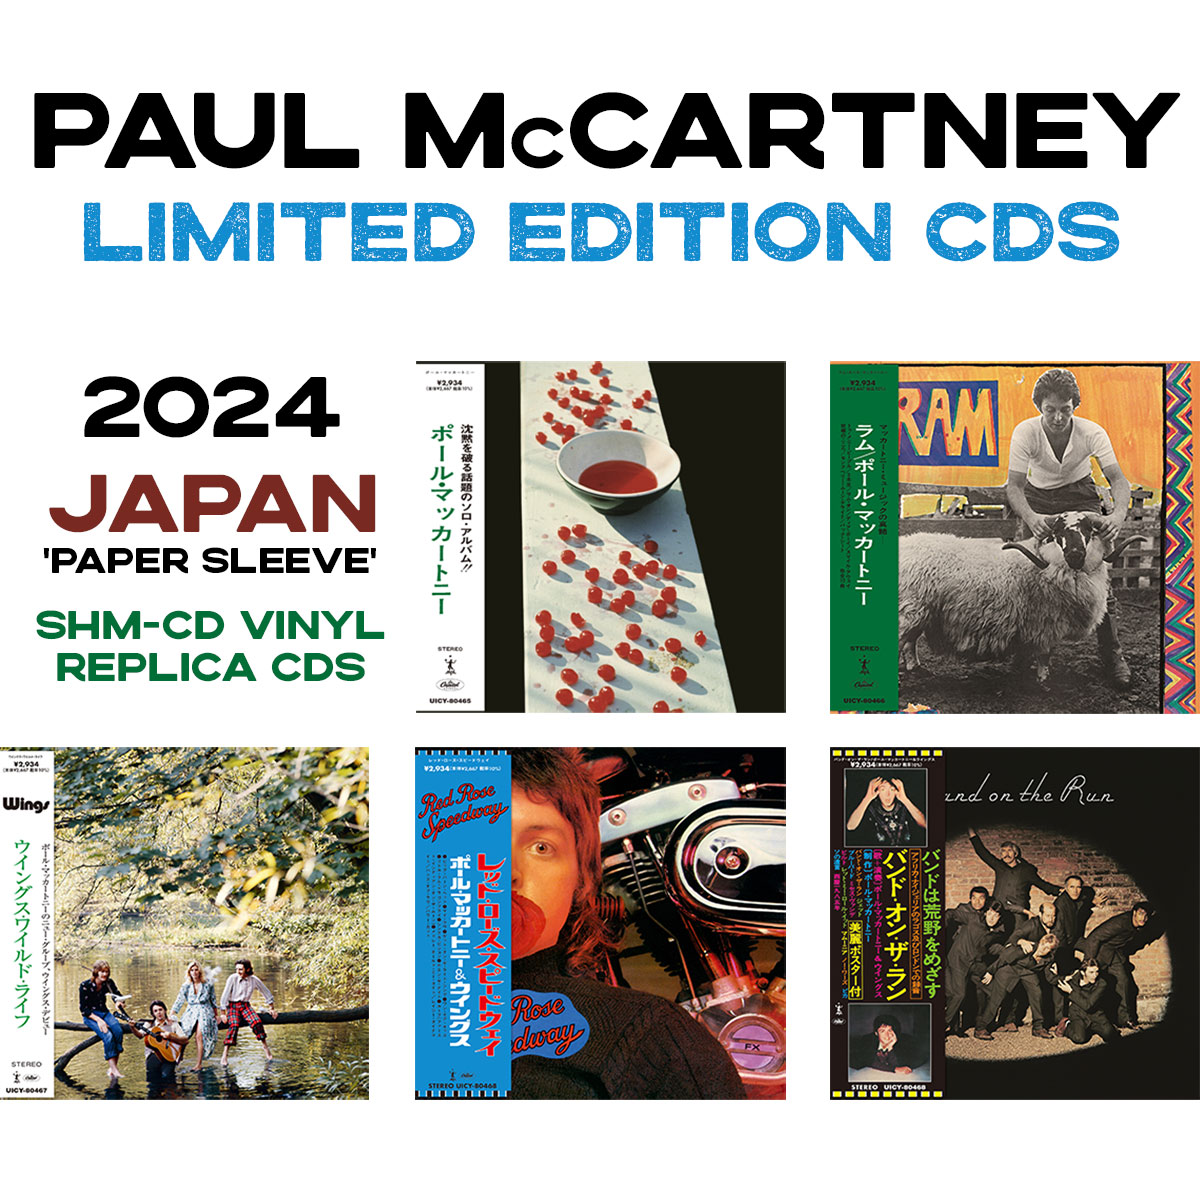 Paul McCartney / mini-LP CDs / Vinyl Replica / Paper Sleeve / SHM-CDs